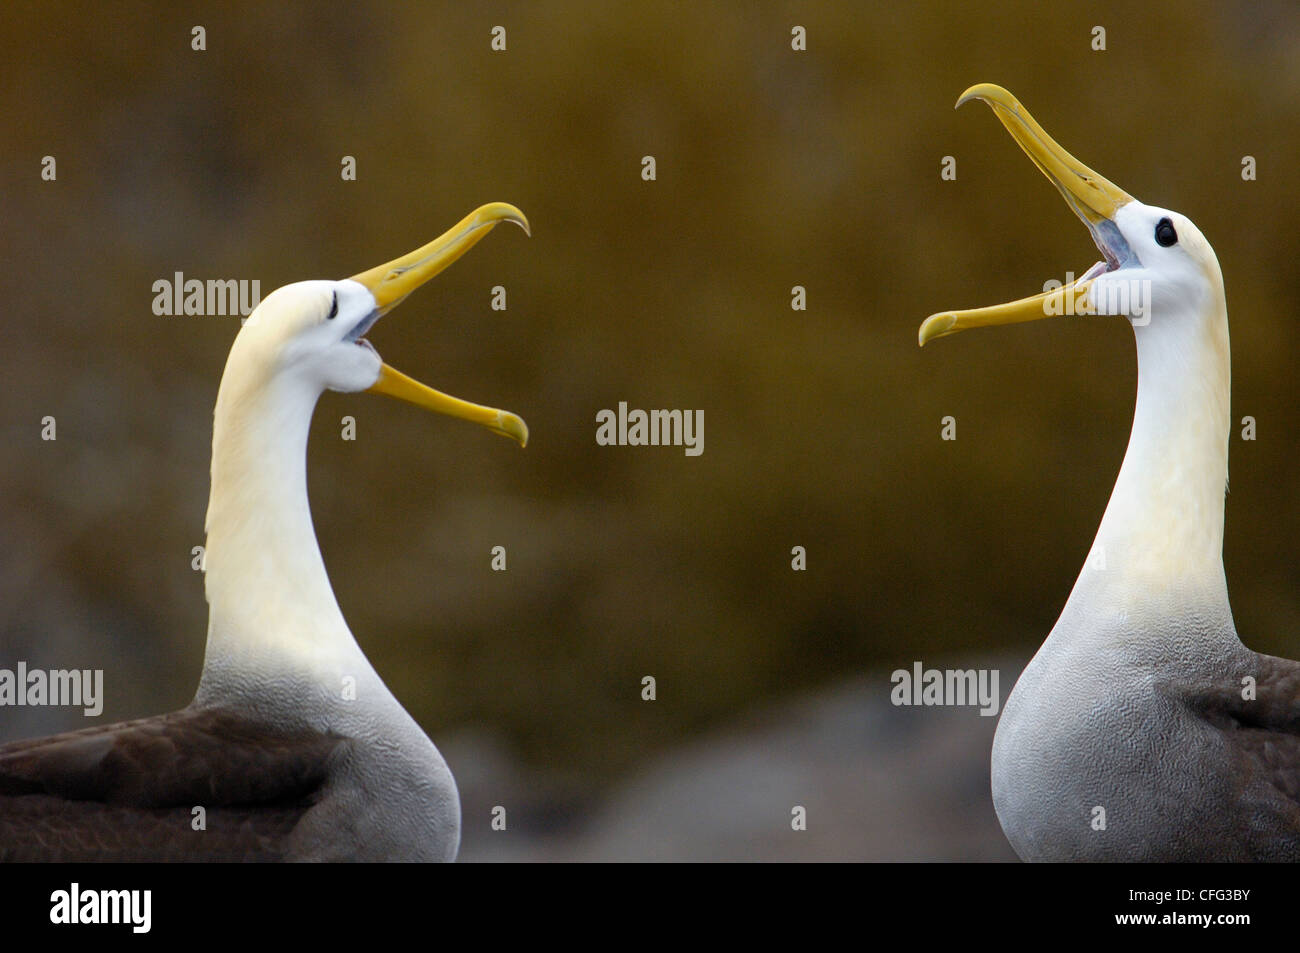 Winkte Albatross paar in Balz Ritual, Espanloa (Haube) Insel, Galapagos-Inseln, Ecuador, Südamerika. Stockfoto